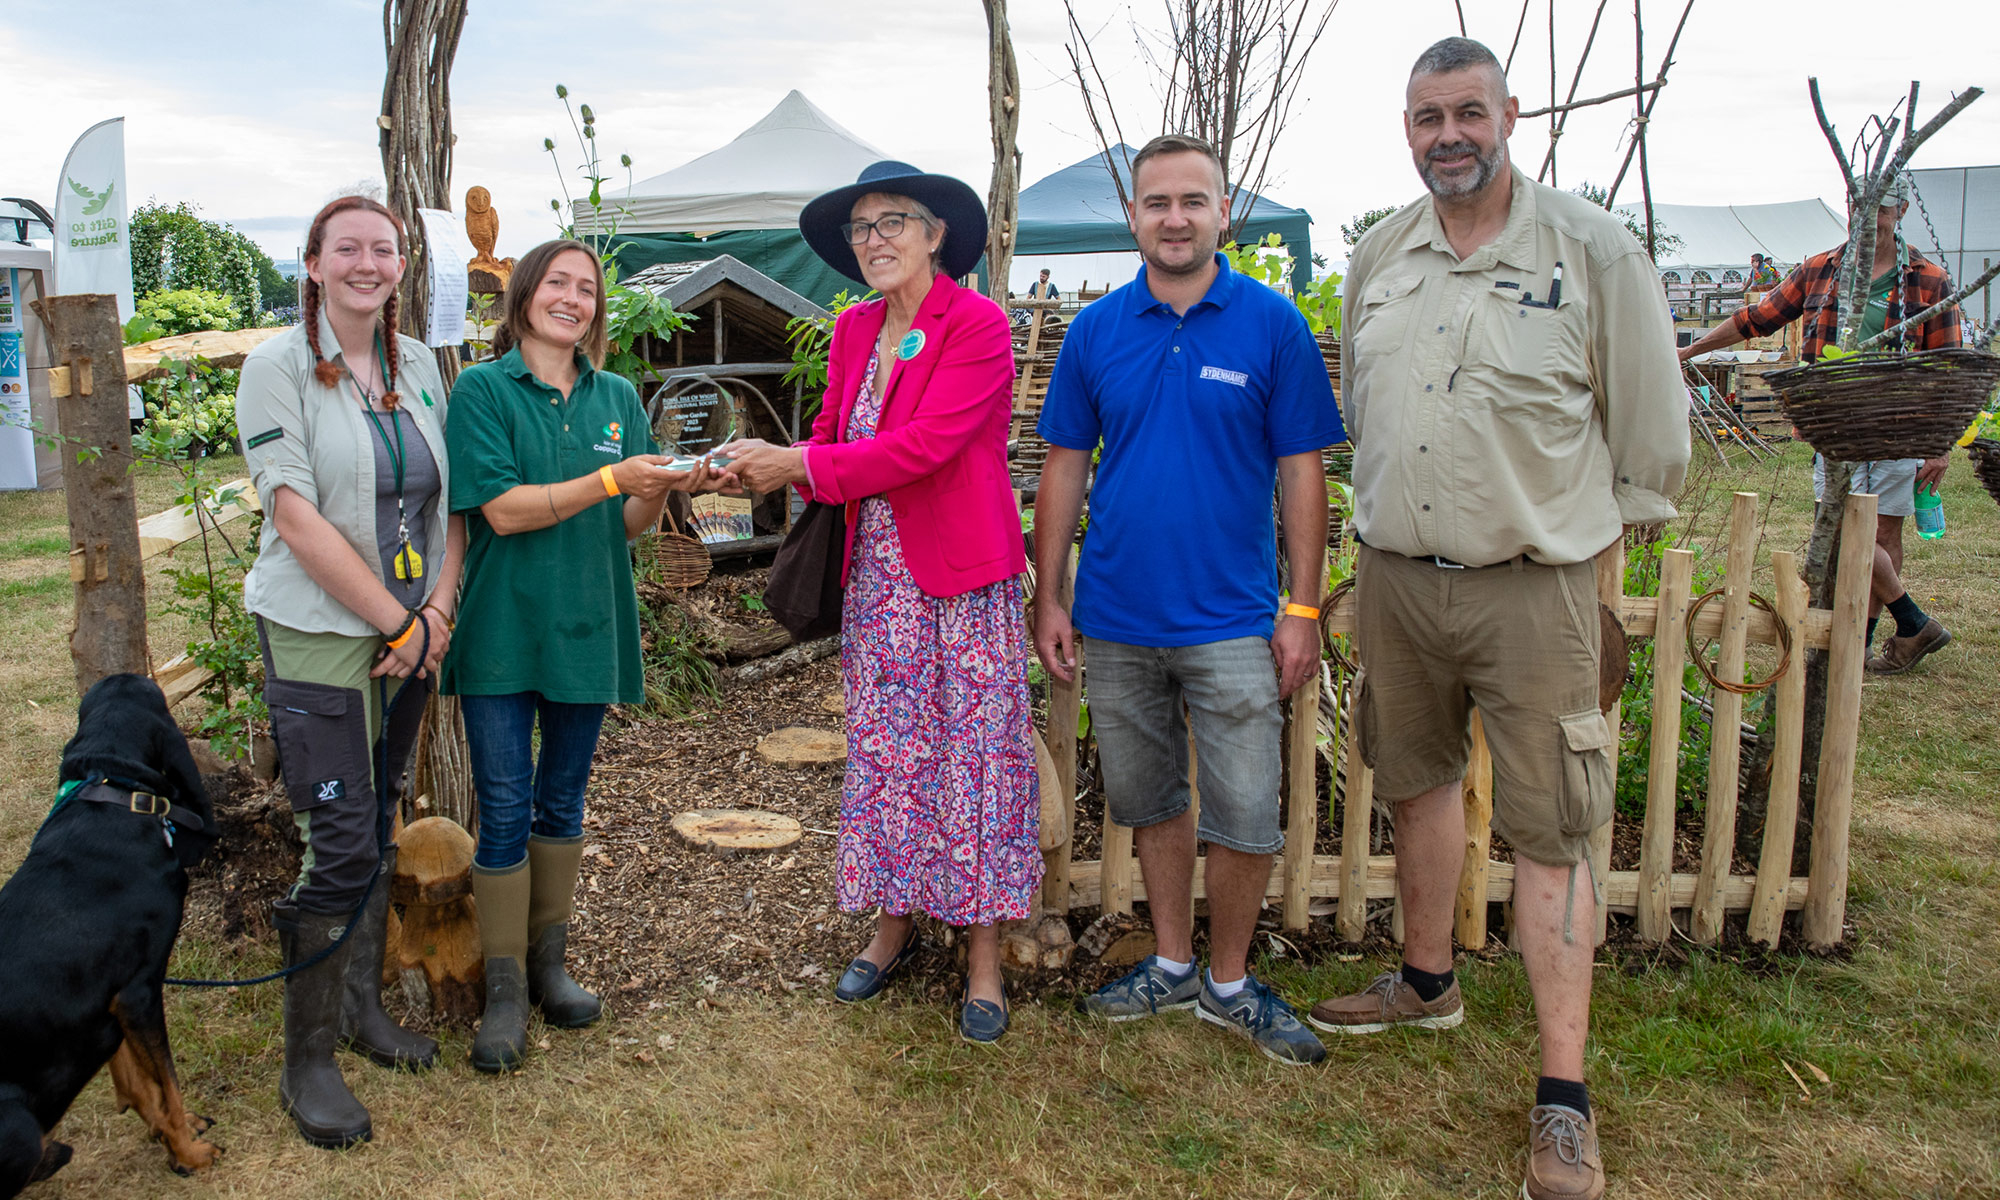 team of gardeners receiving award in front of their show garden